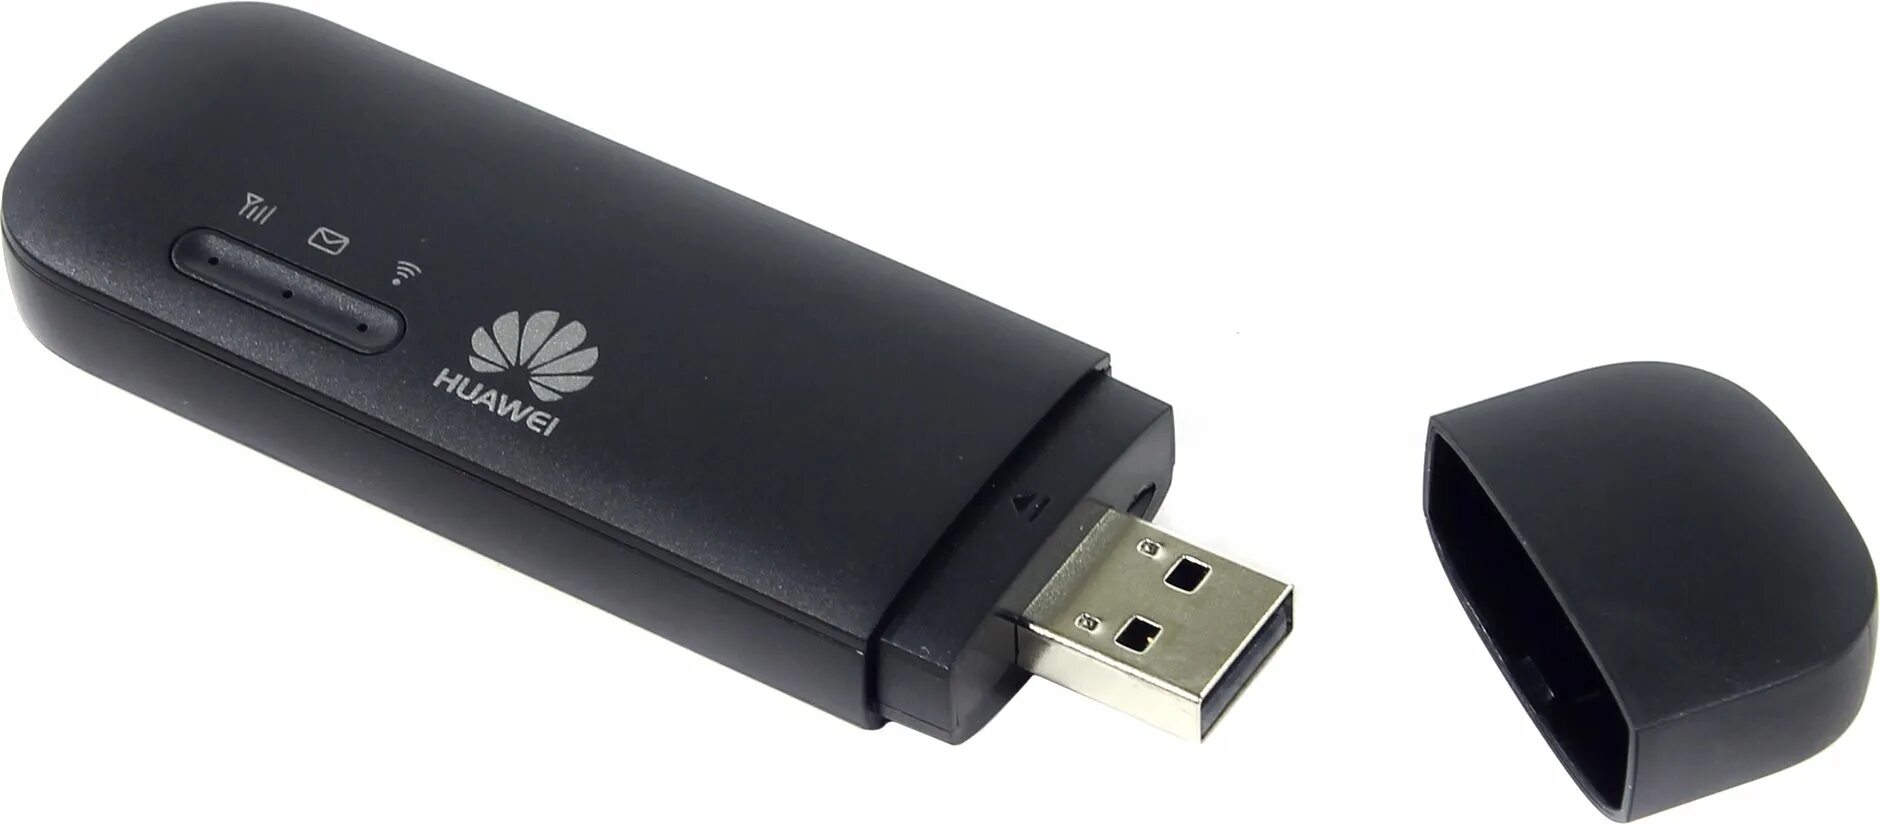 Роутер huawei e8372. Модем 3g/4g Huawei e8372h- 320 USB Wi-Fi +Router внешний черный. Модем Huawei e8372 4g USB. Huawei e8372h-320. Huawei e8372h-320 USB.